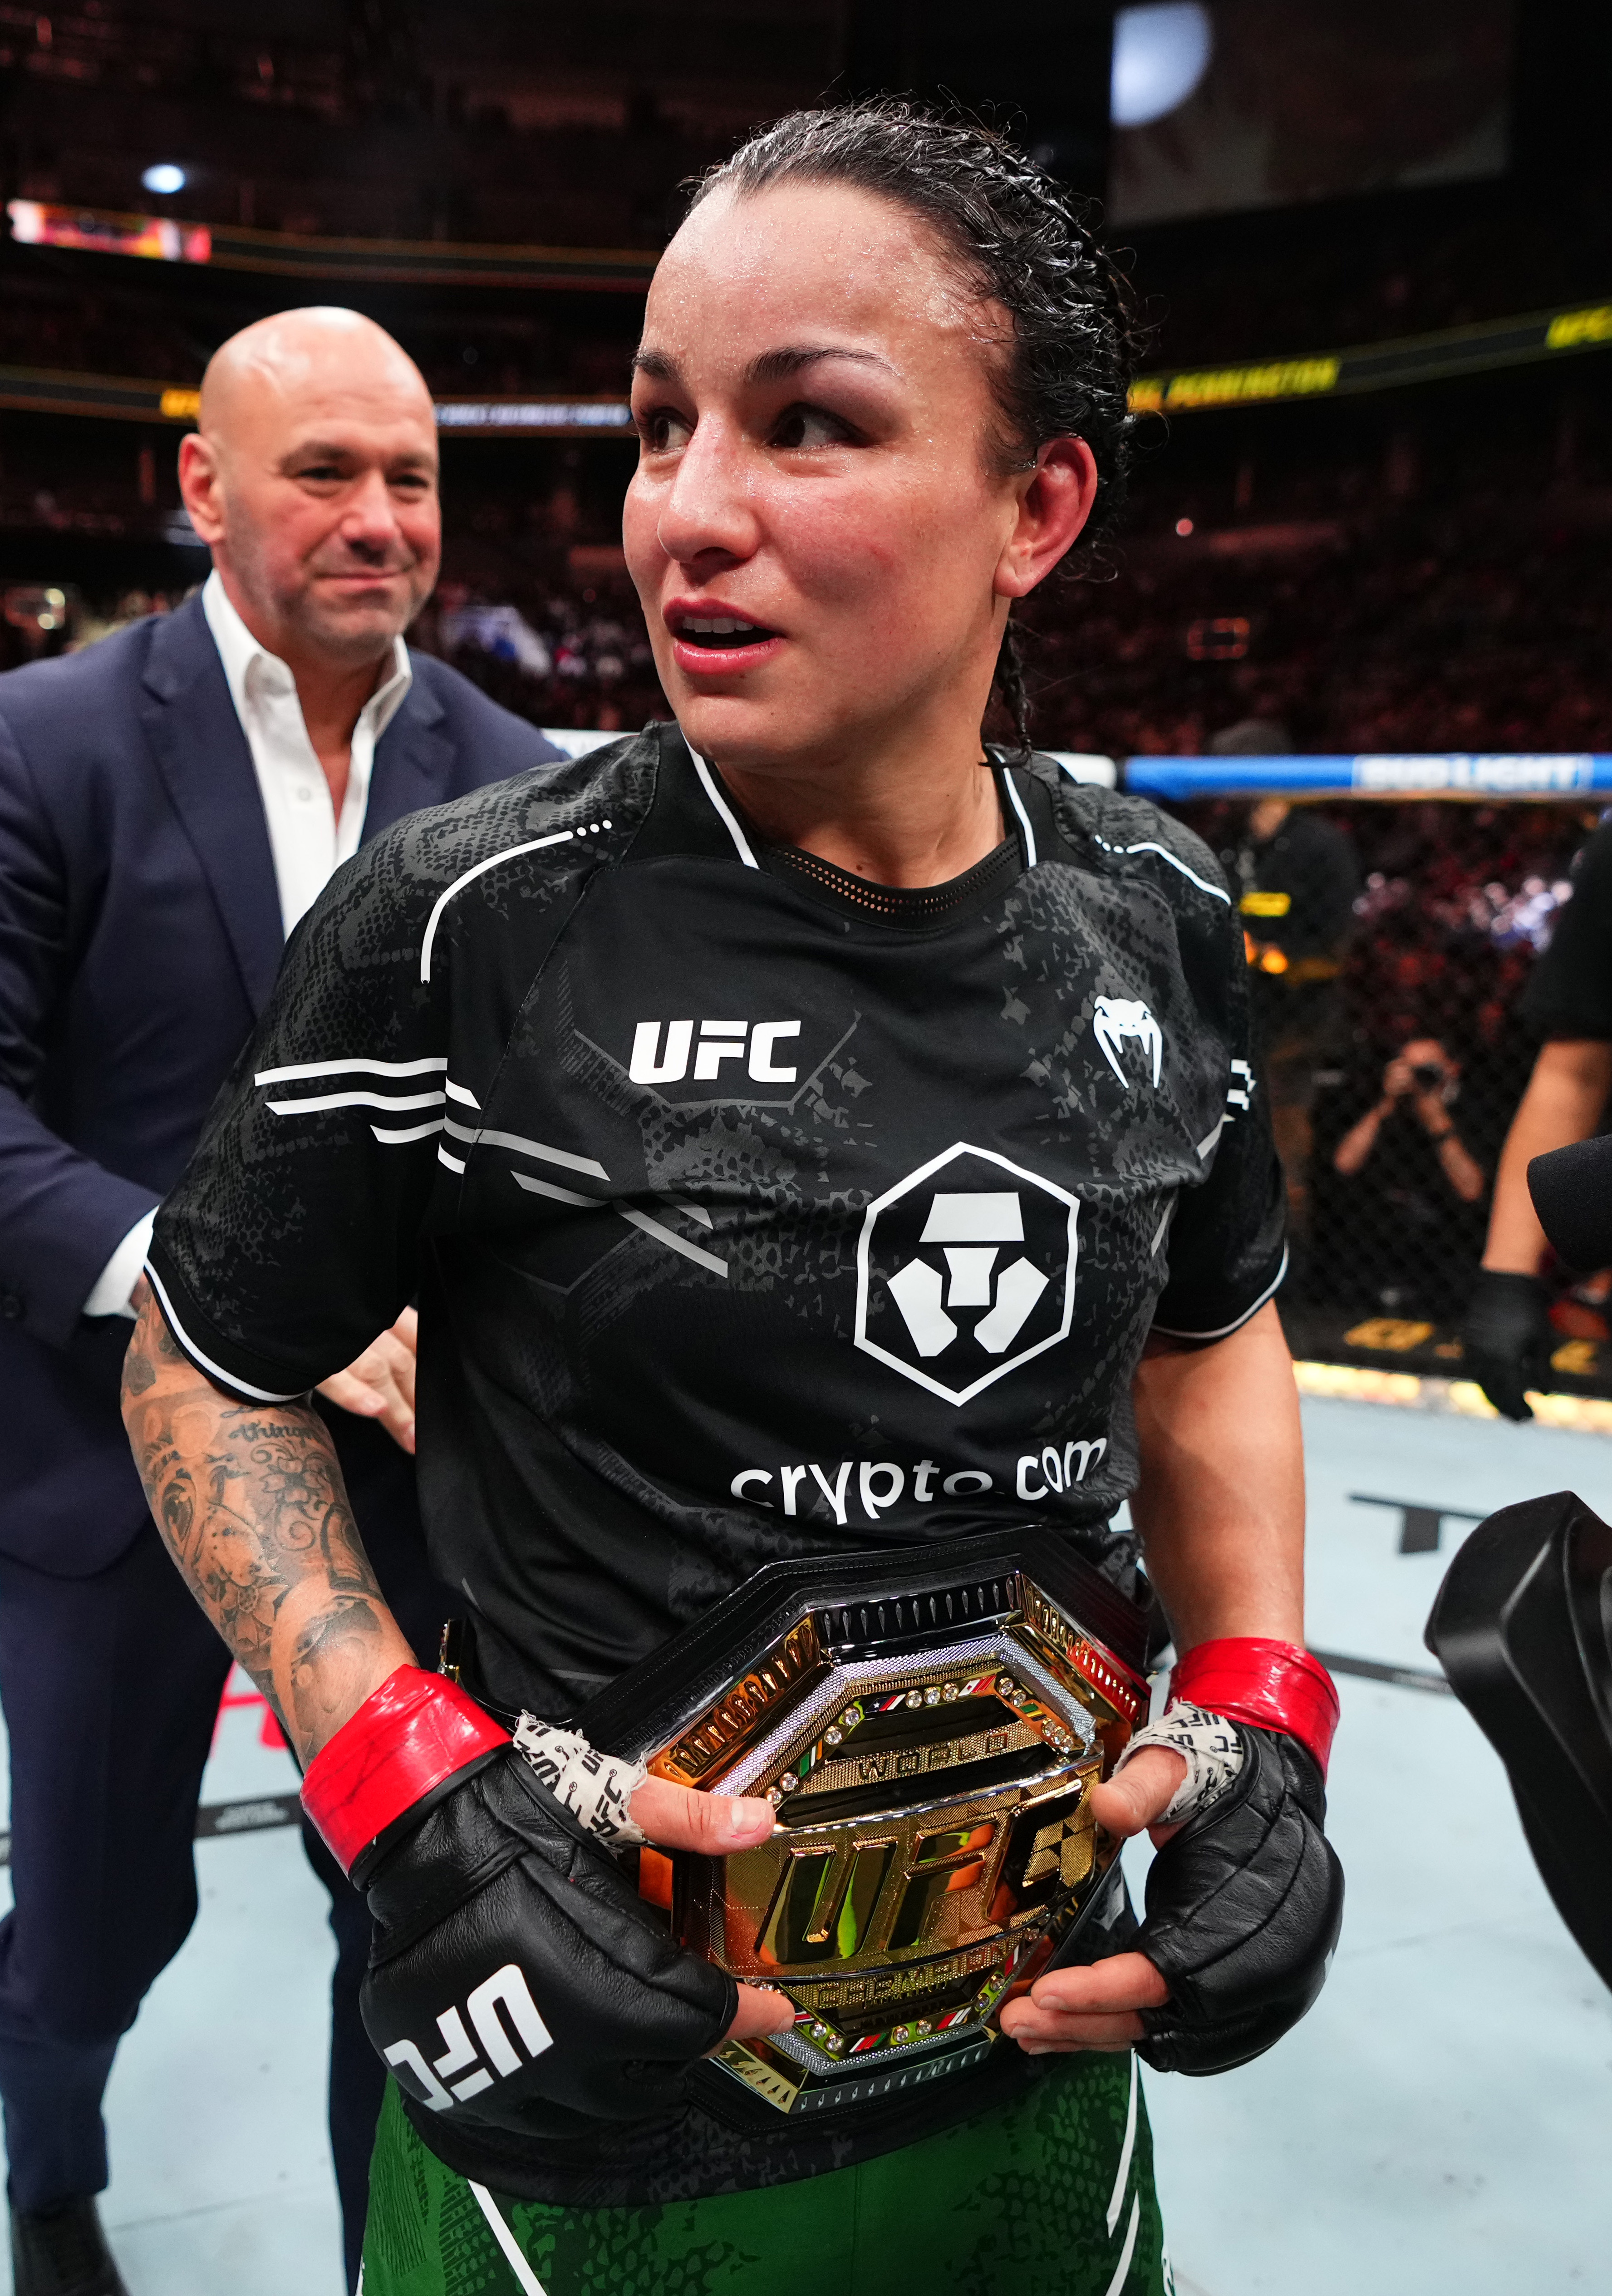 Raquel Pennington claimed the vacant women's bantamweight title at UFC 297